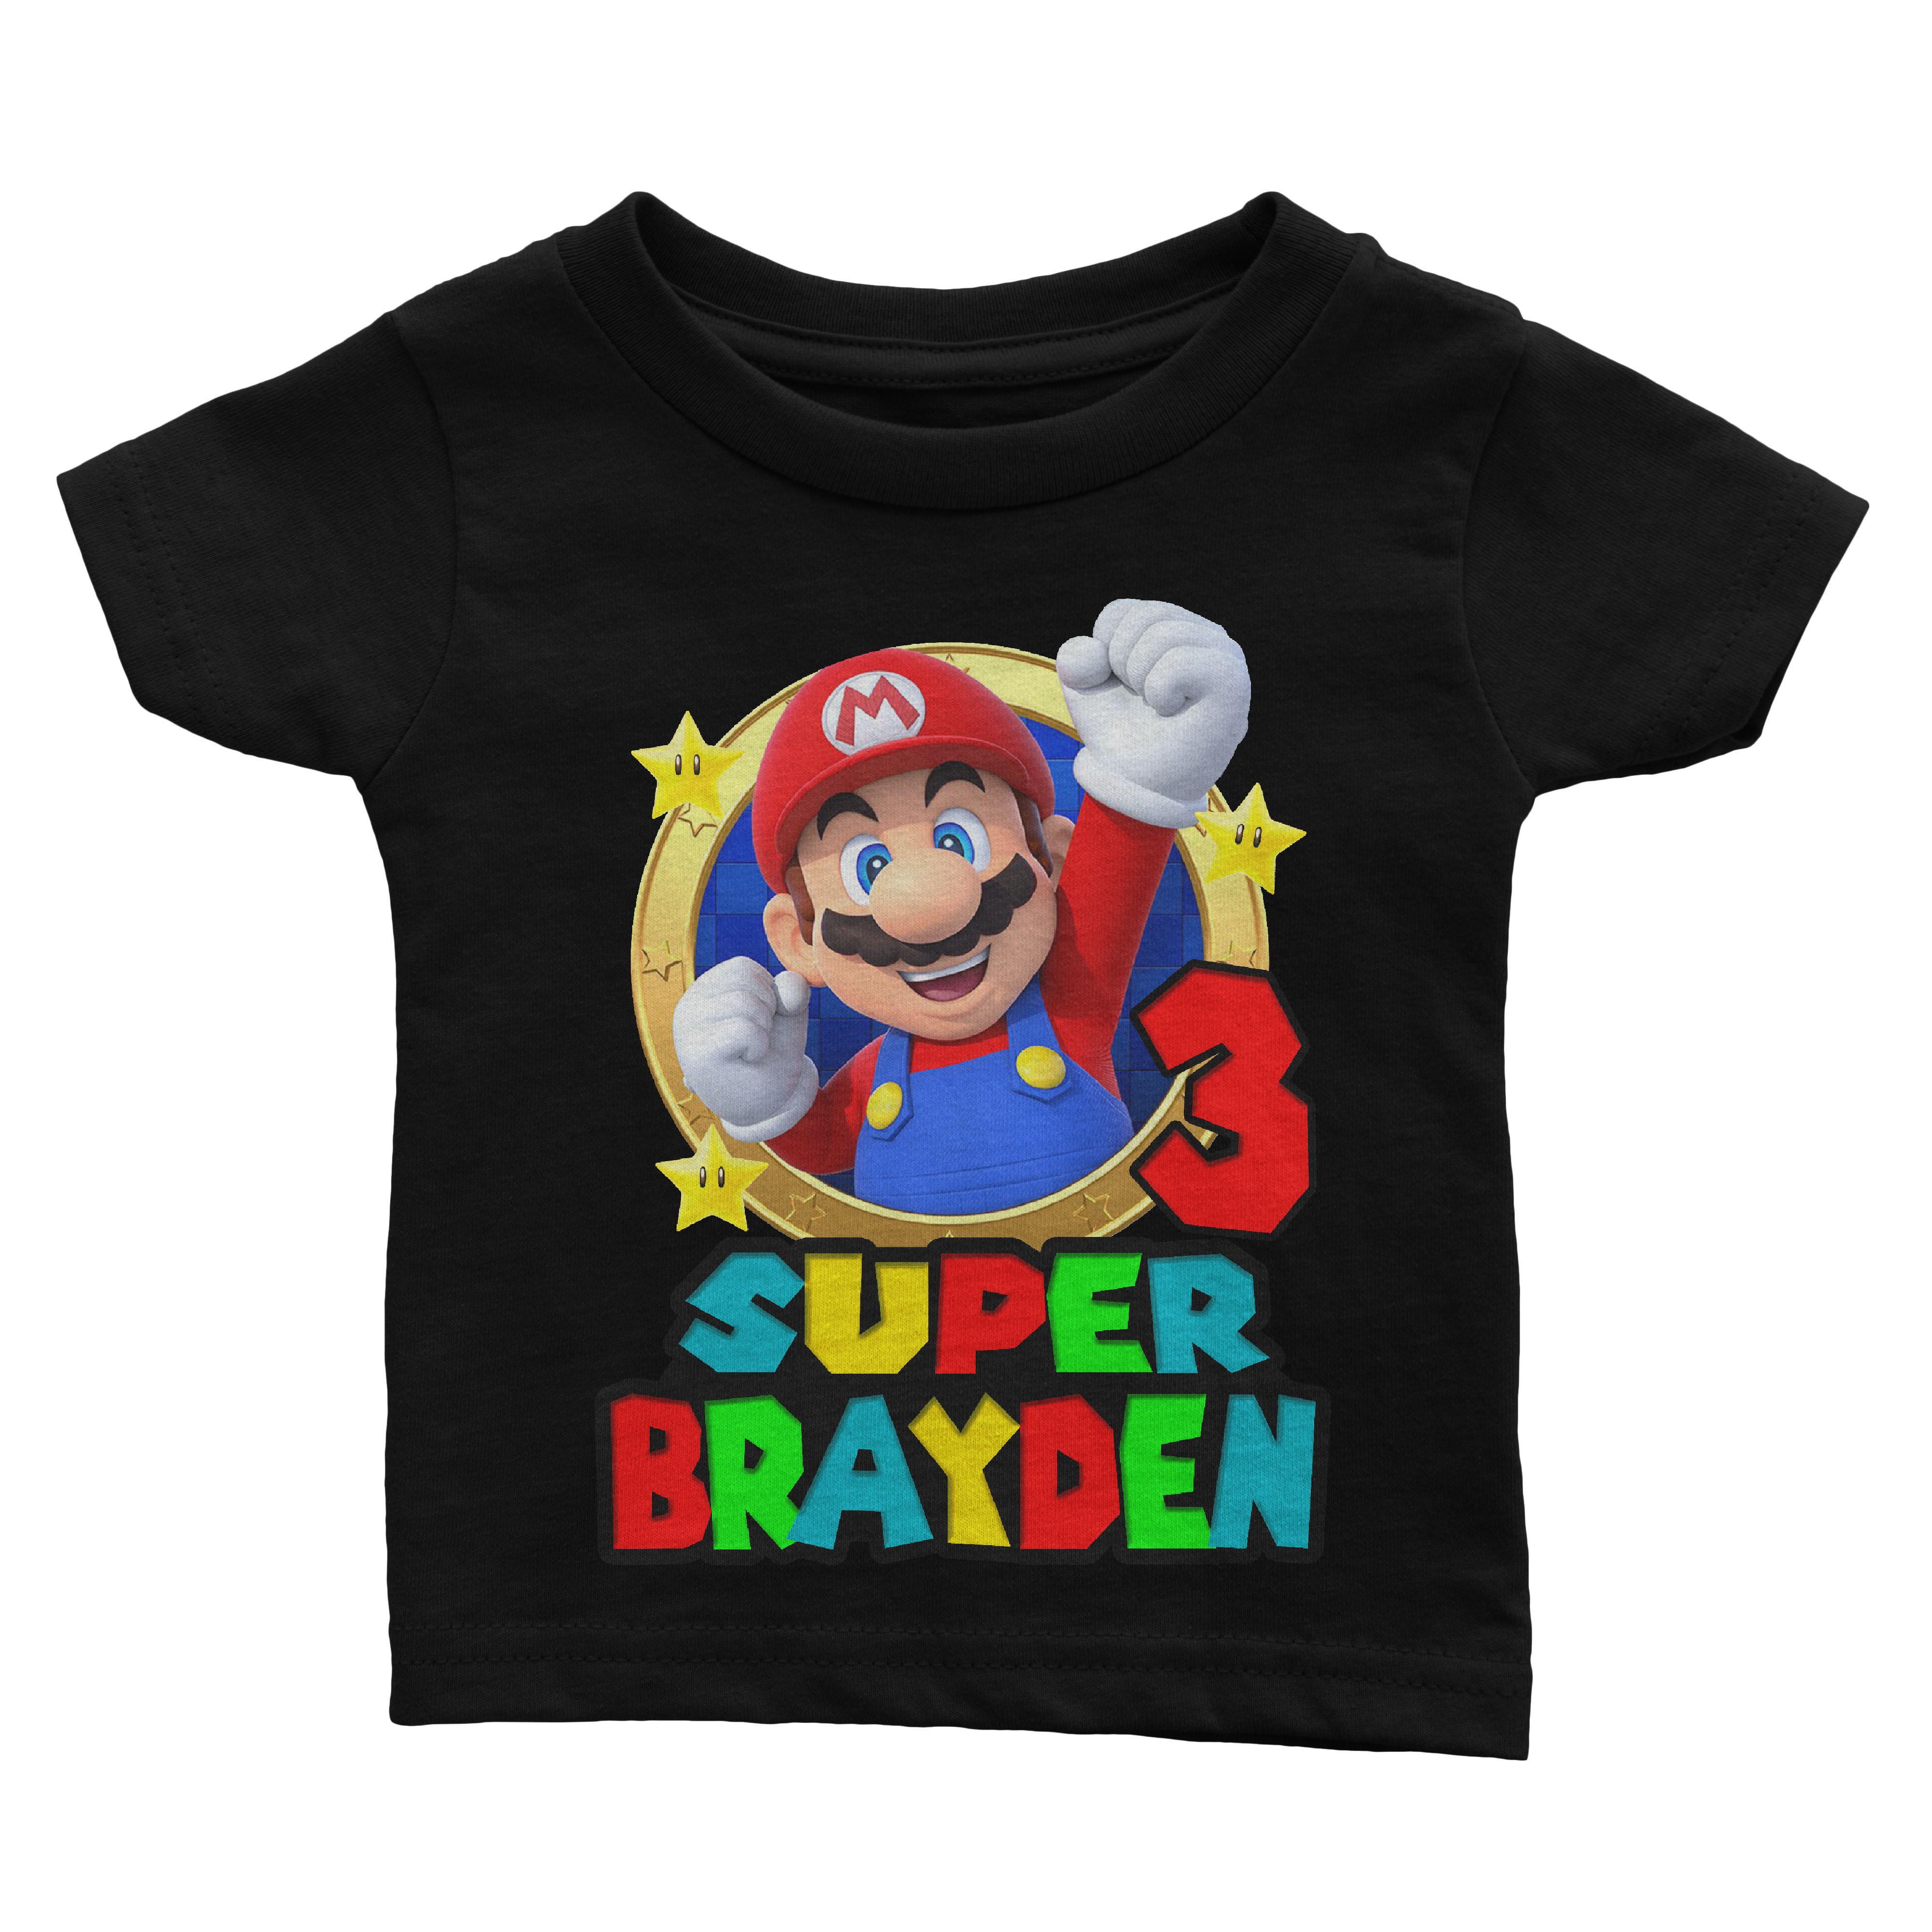 Brayden Point T-Shirts for Sale